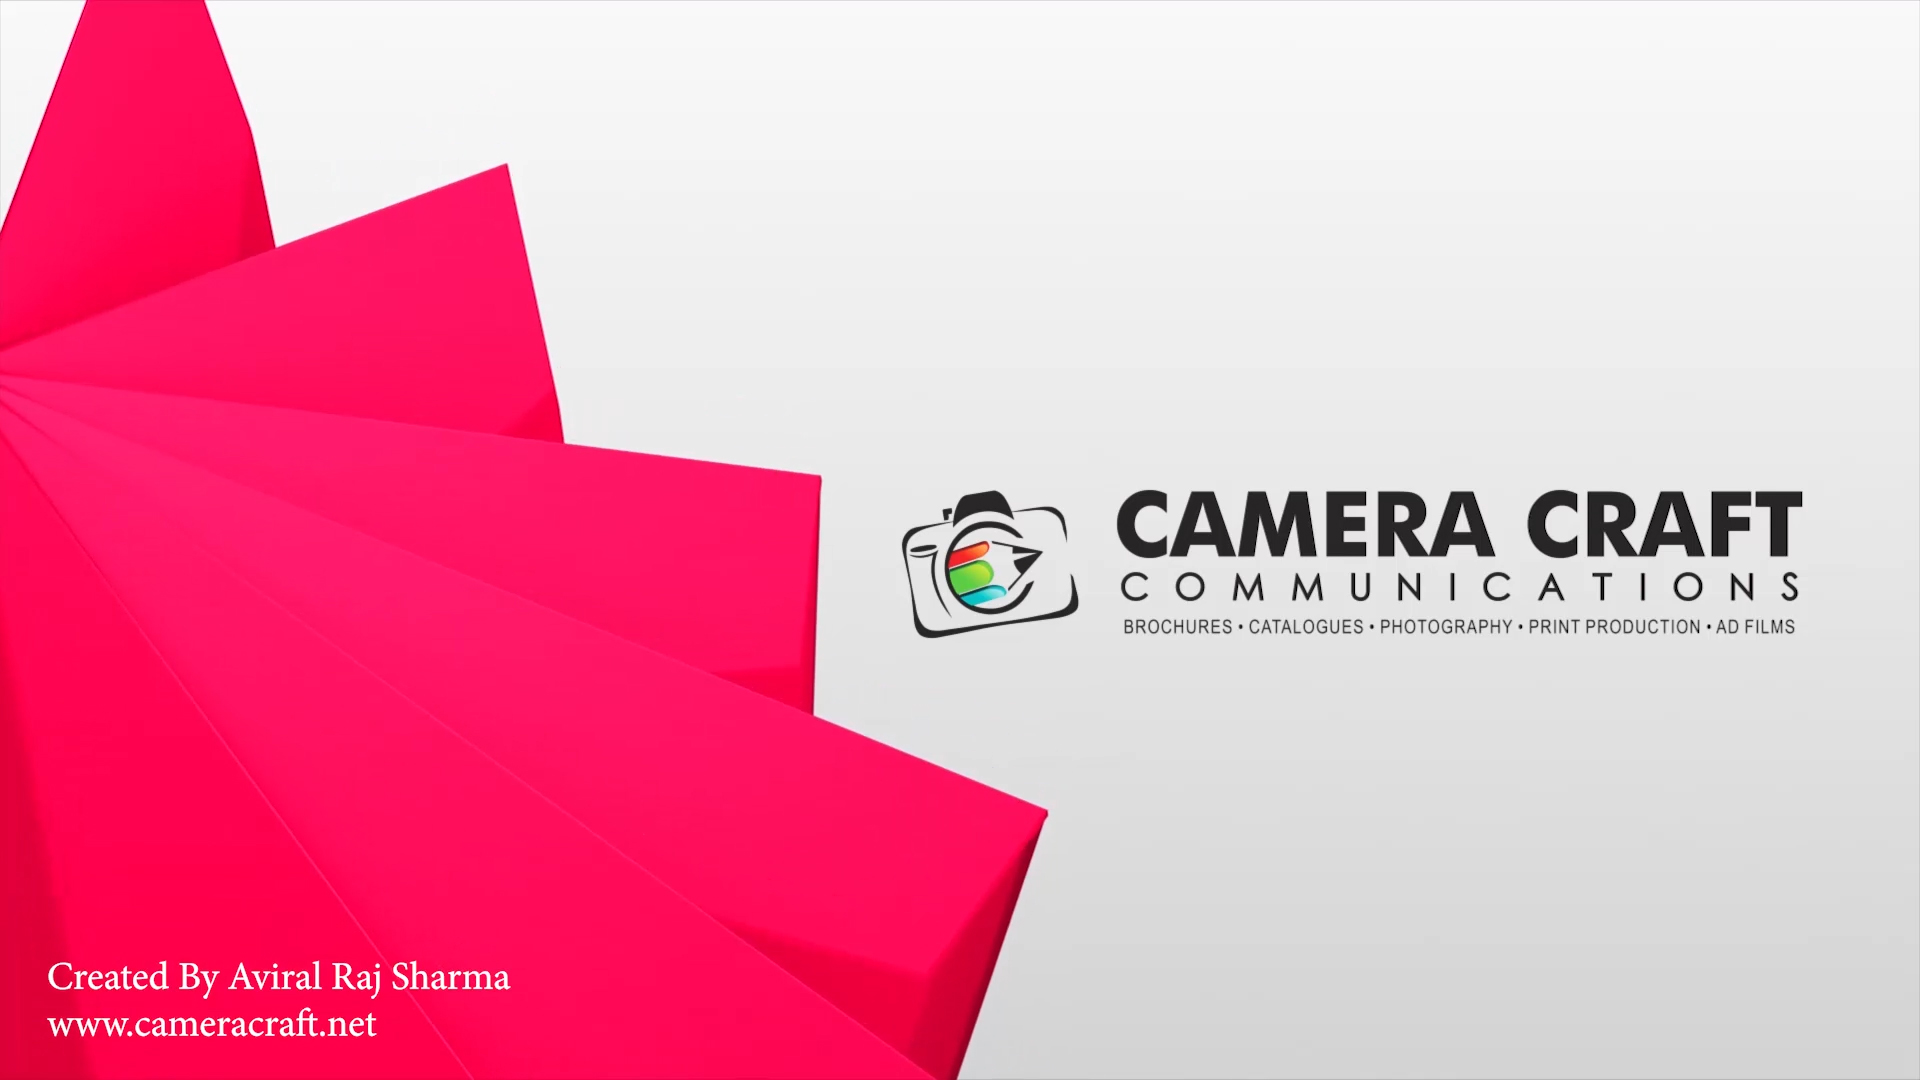  Camera Craft Communications - camera-craft